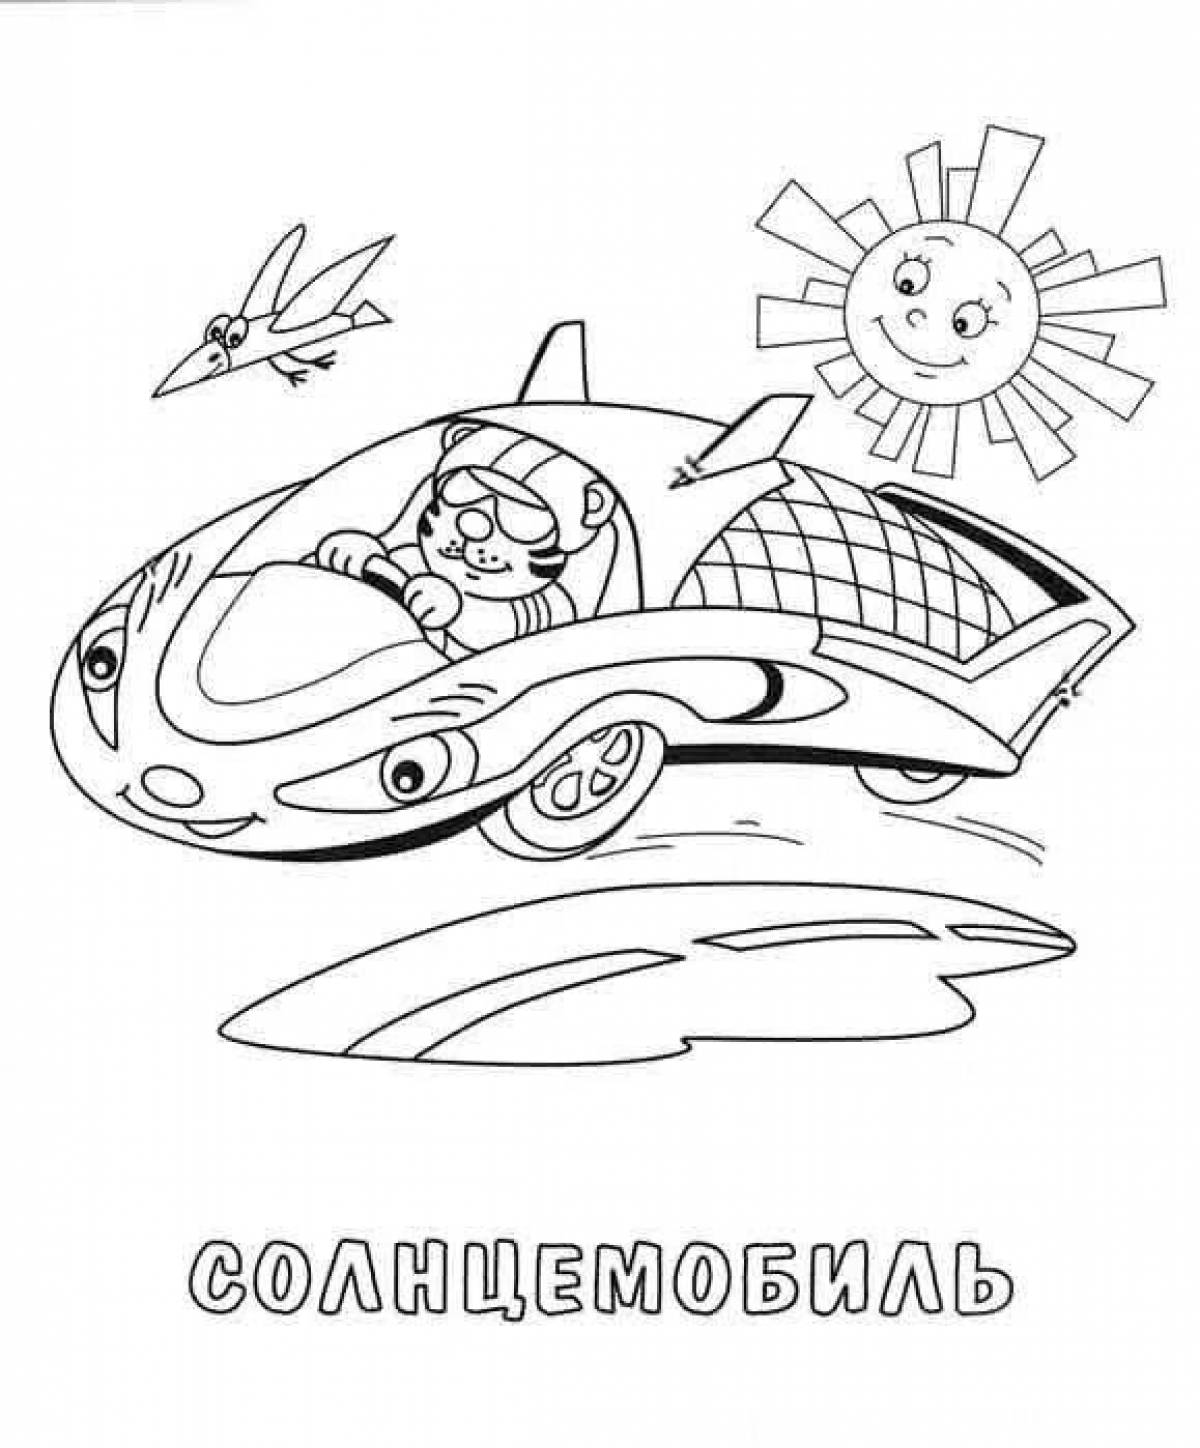 Wonderful flying car coloring book